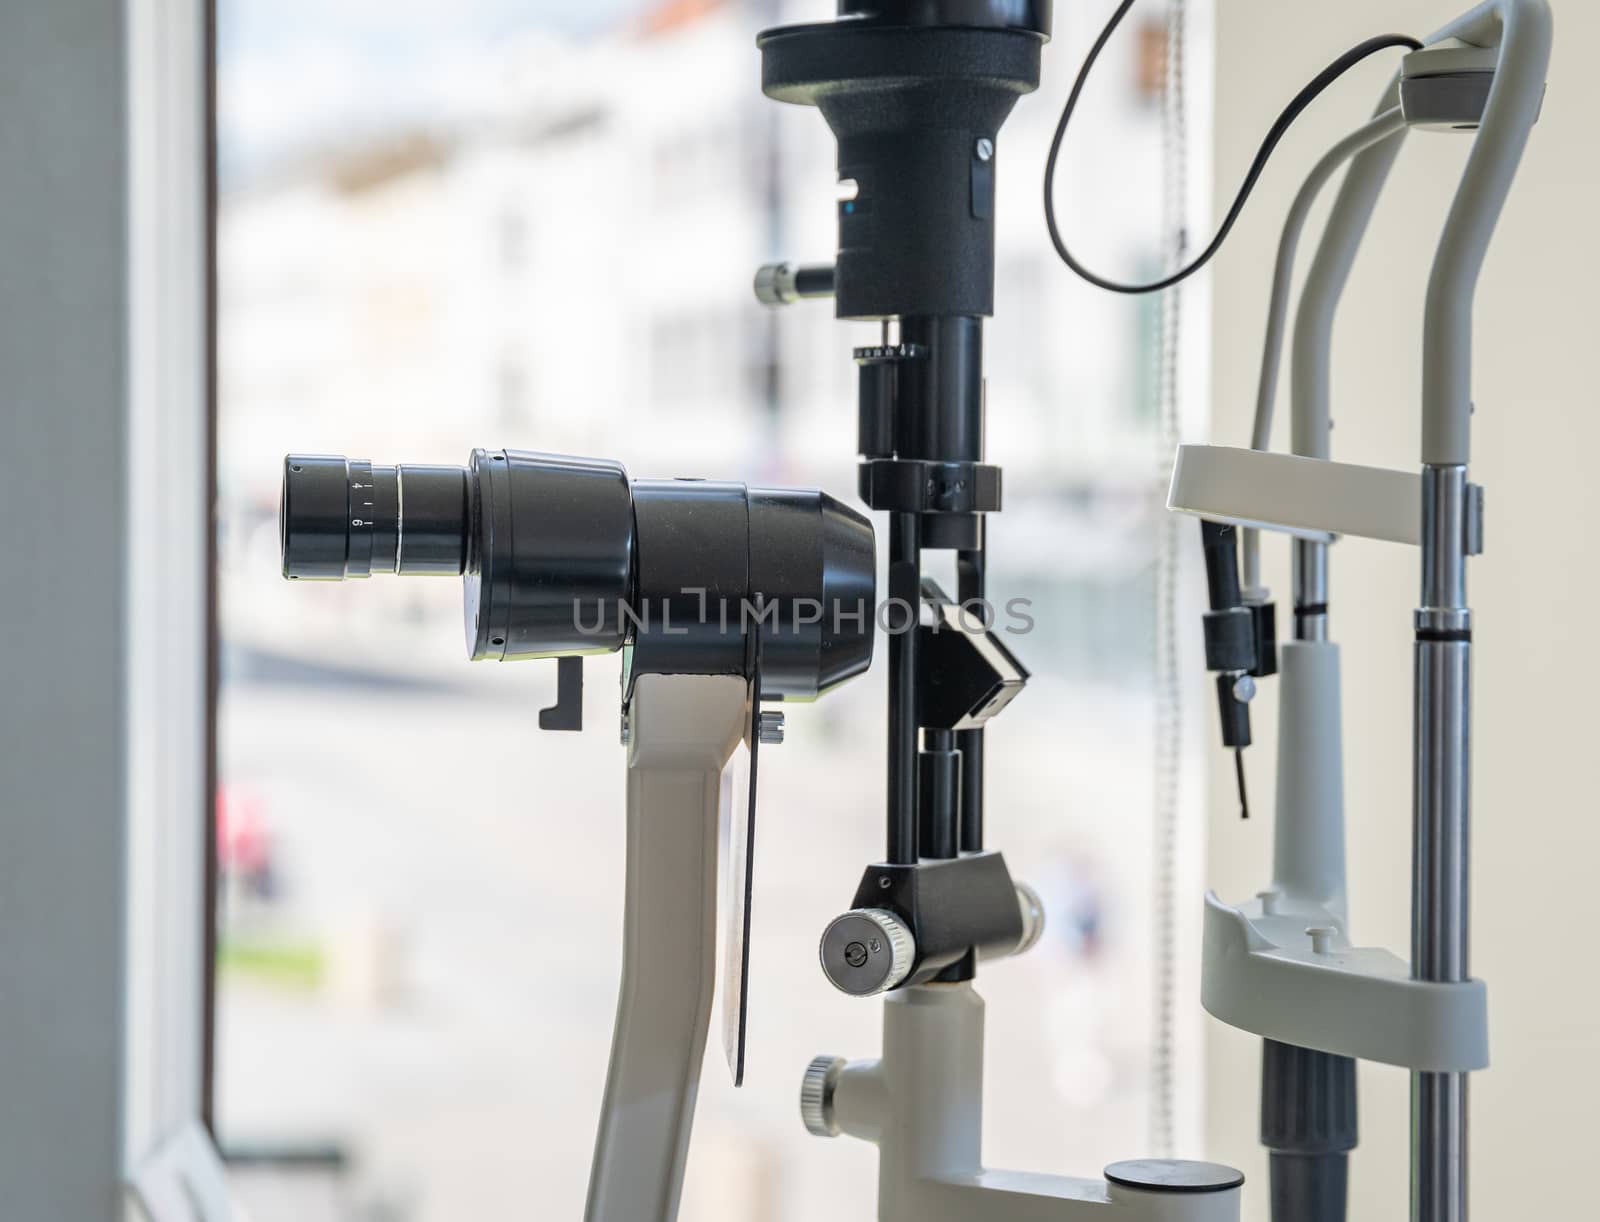 microscope for eye examination in hospital